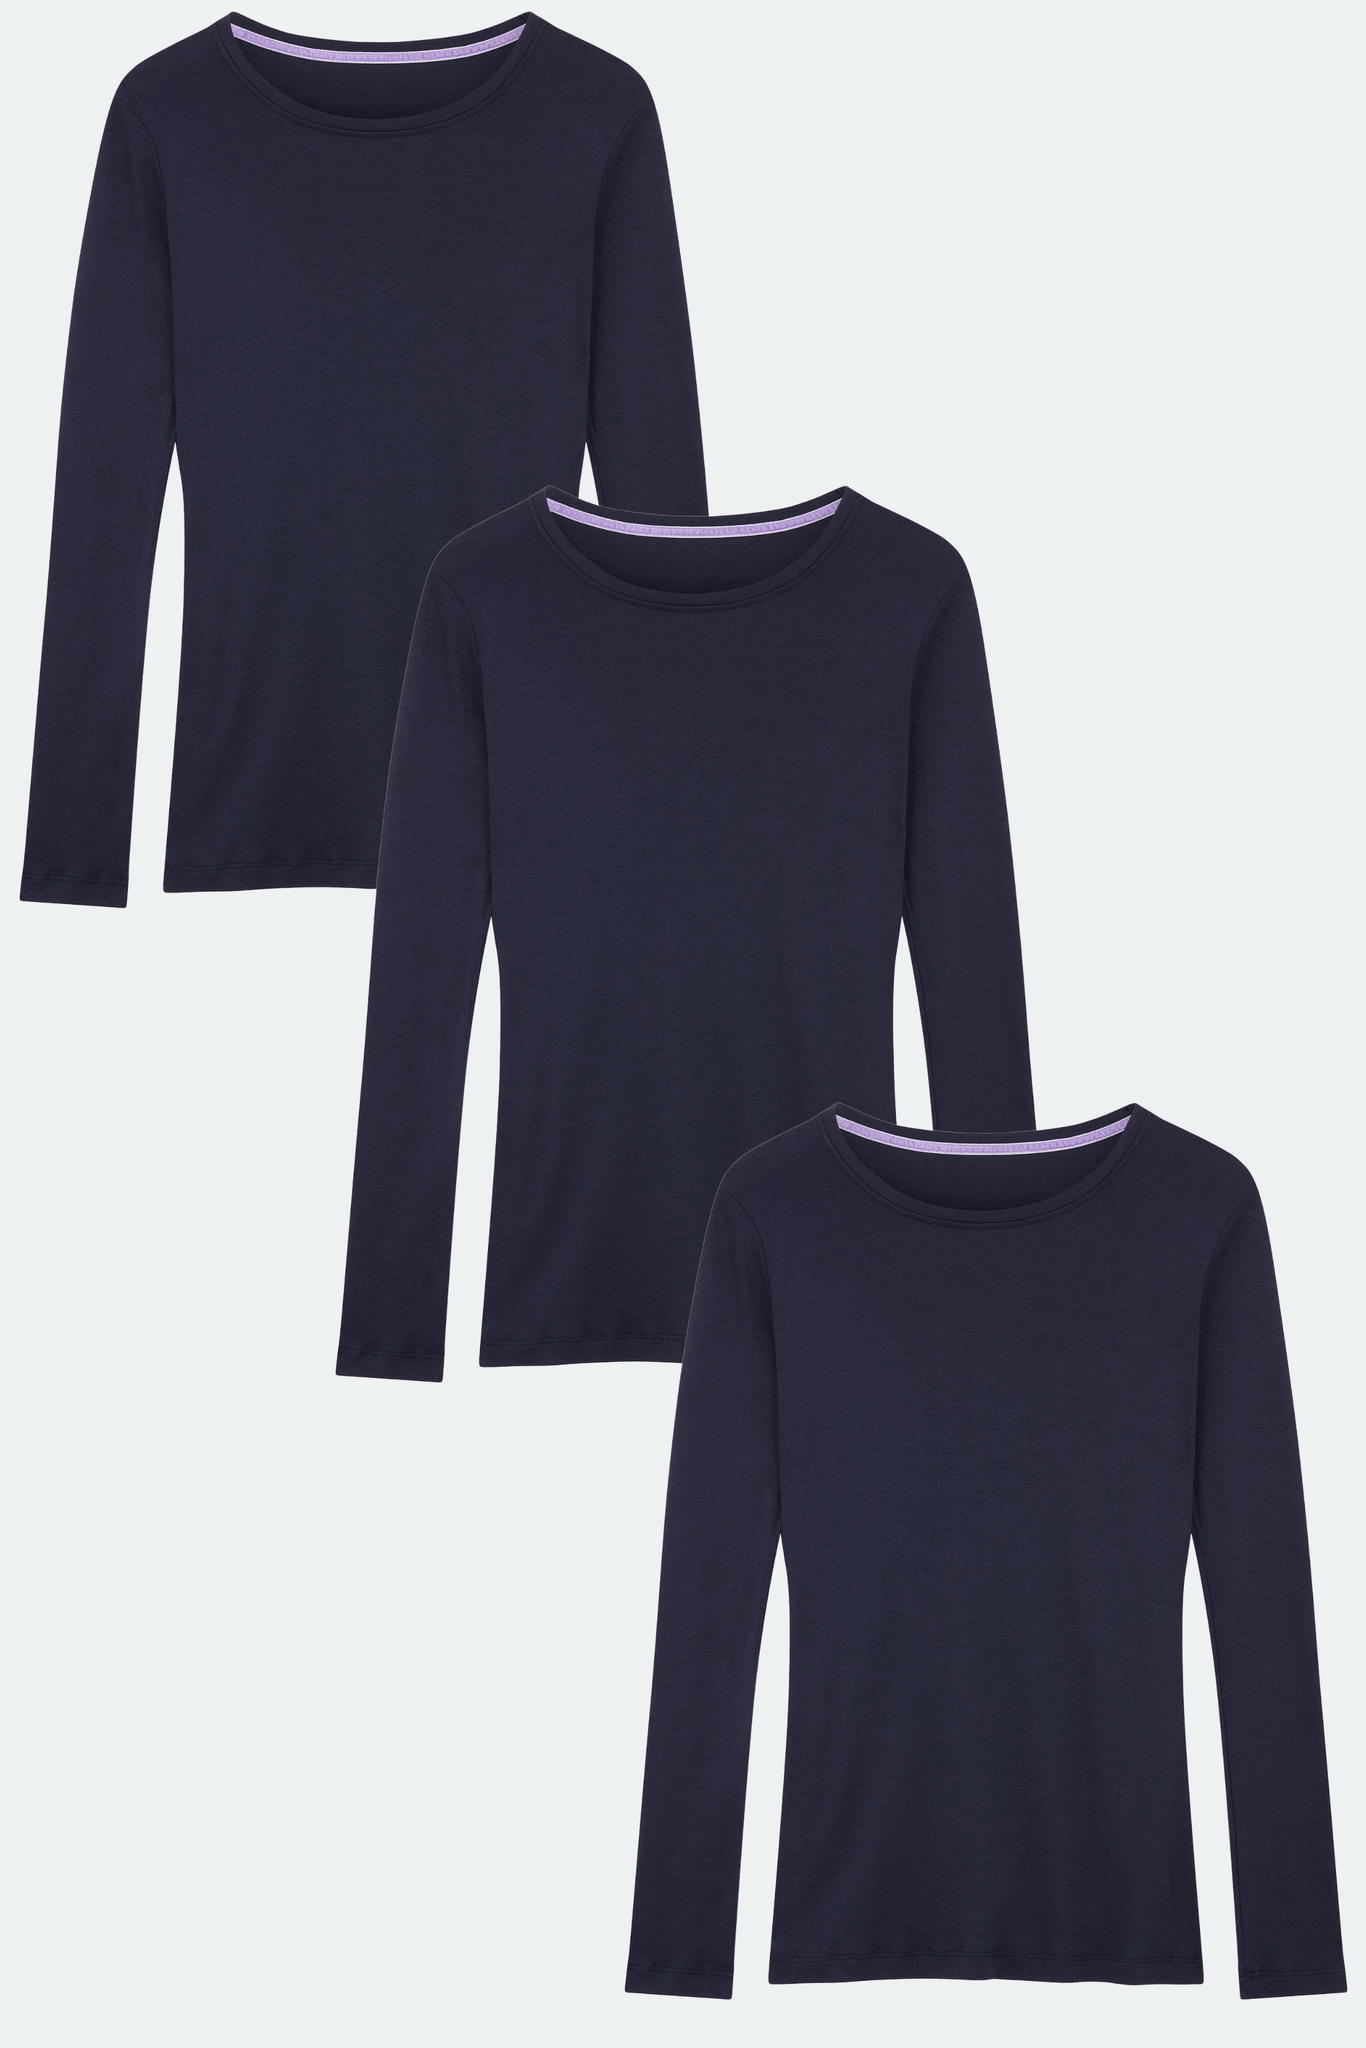 Long Sleeve Crew Neck Cotton Modal Blend T-shirt Bundle | Lavender Hill  Clothing